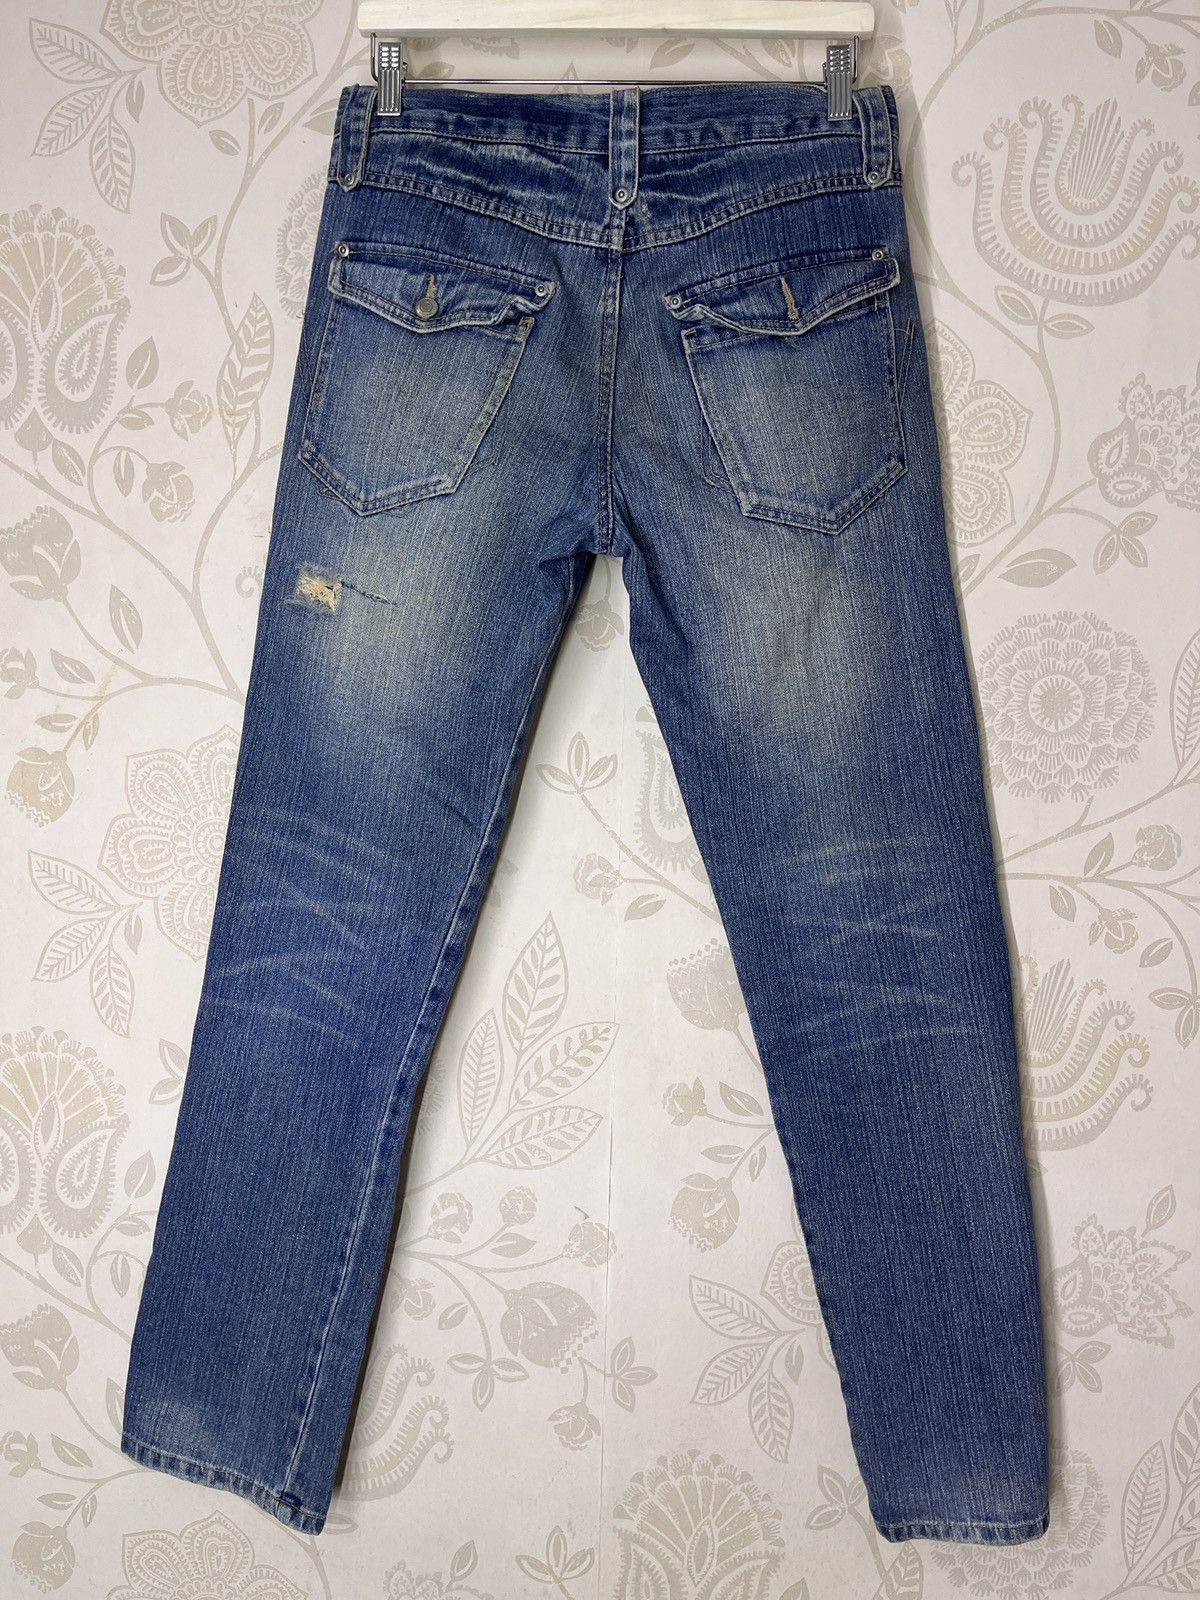 Ripped Three Stones Throw Denim Jeans Avant Garde Pockets - 2